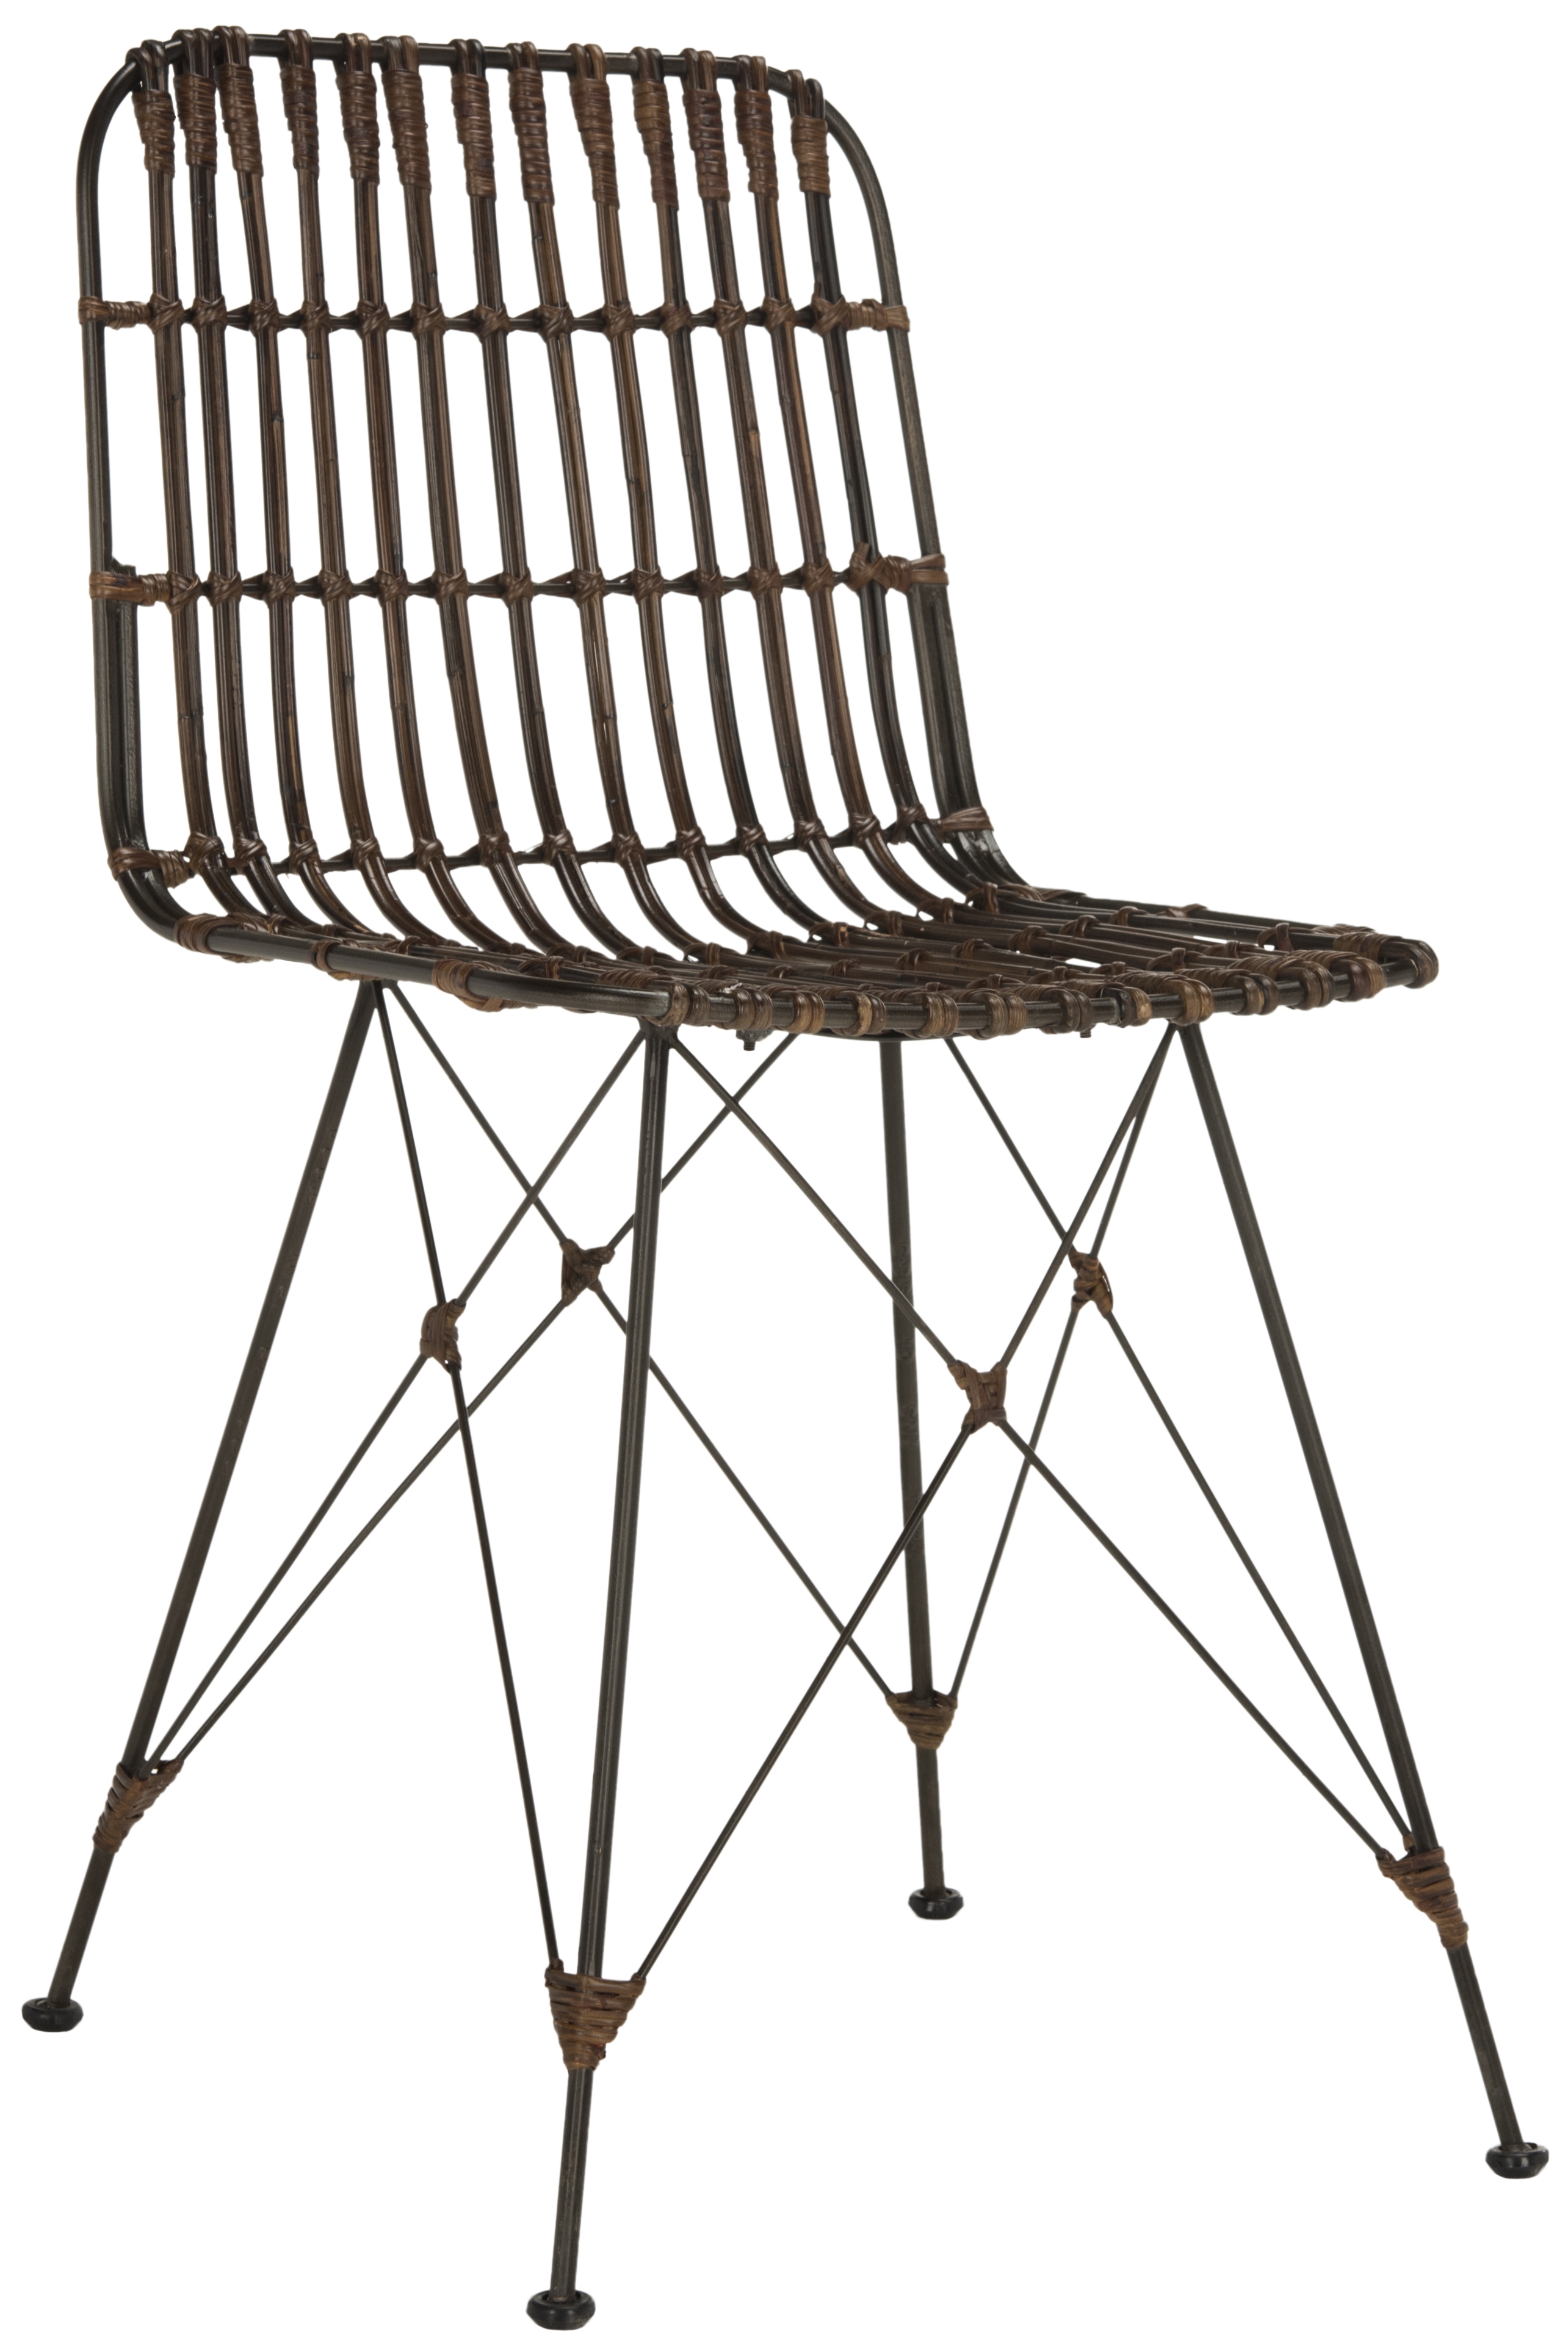 Minerva Wicker Dining Chair (Set of 2) - Croco Brown - Arlo Home - Image 2